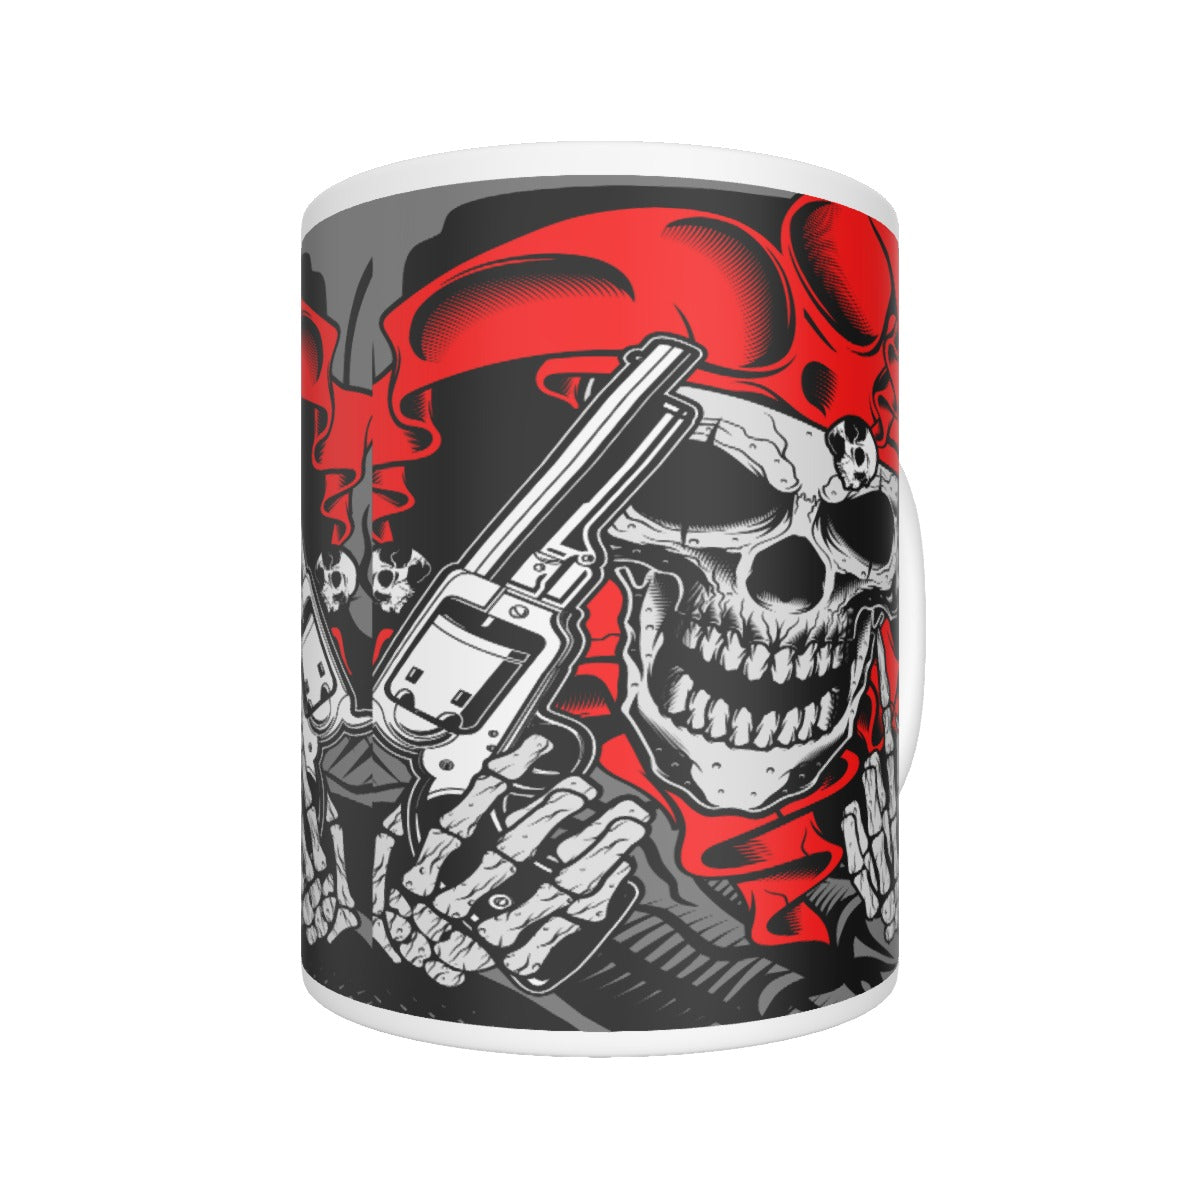 Red skull Ceramics mug, Gothic skeleton mug cup